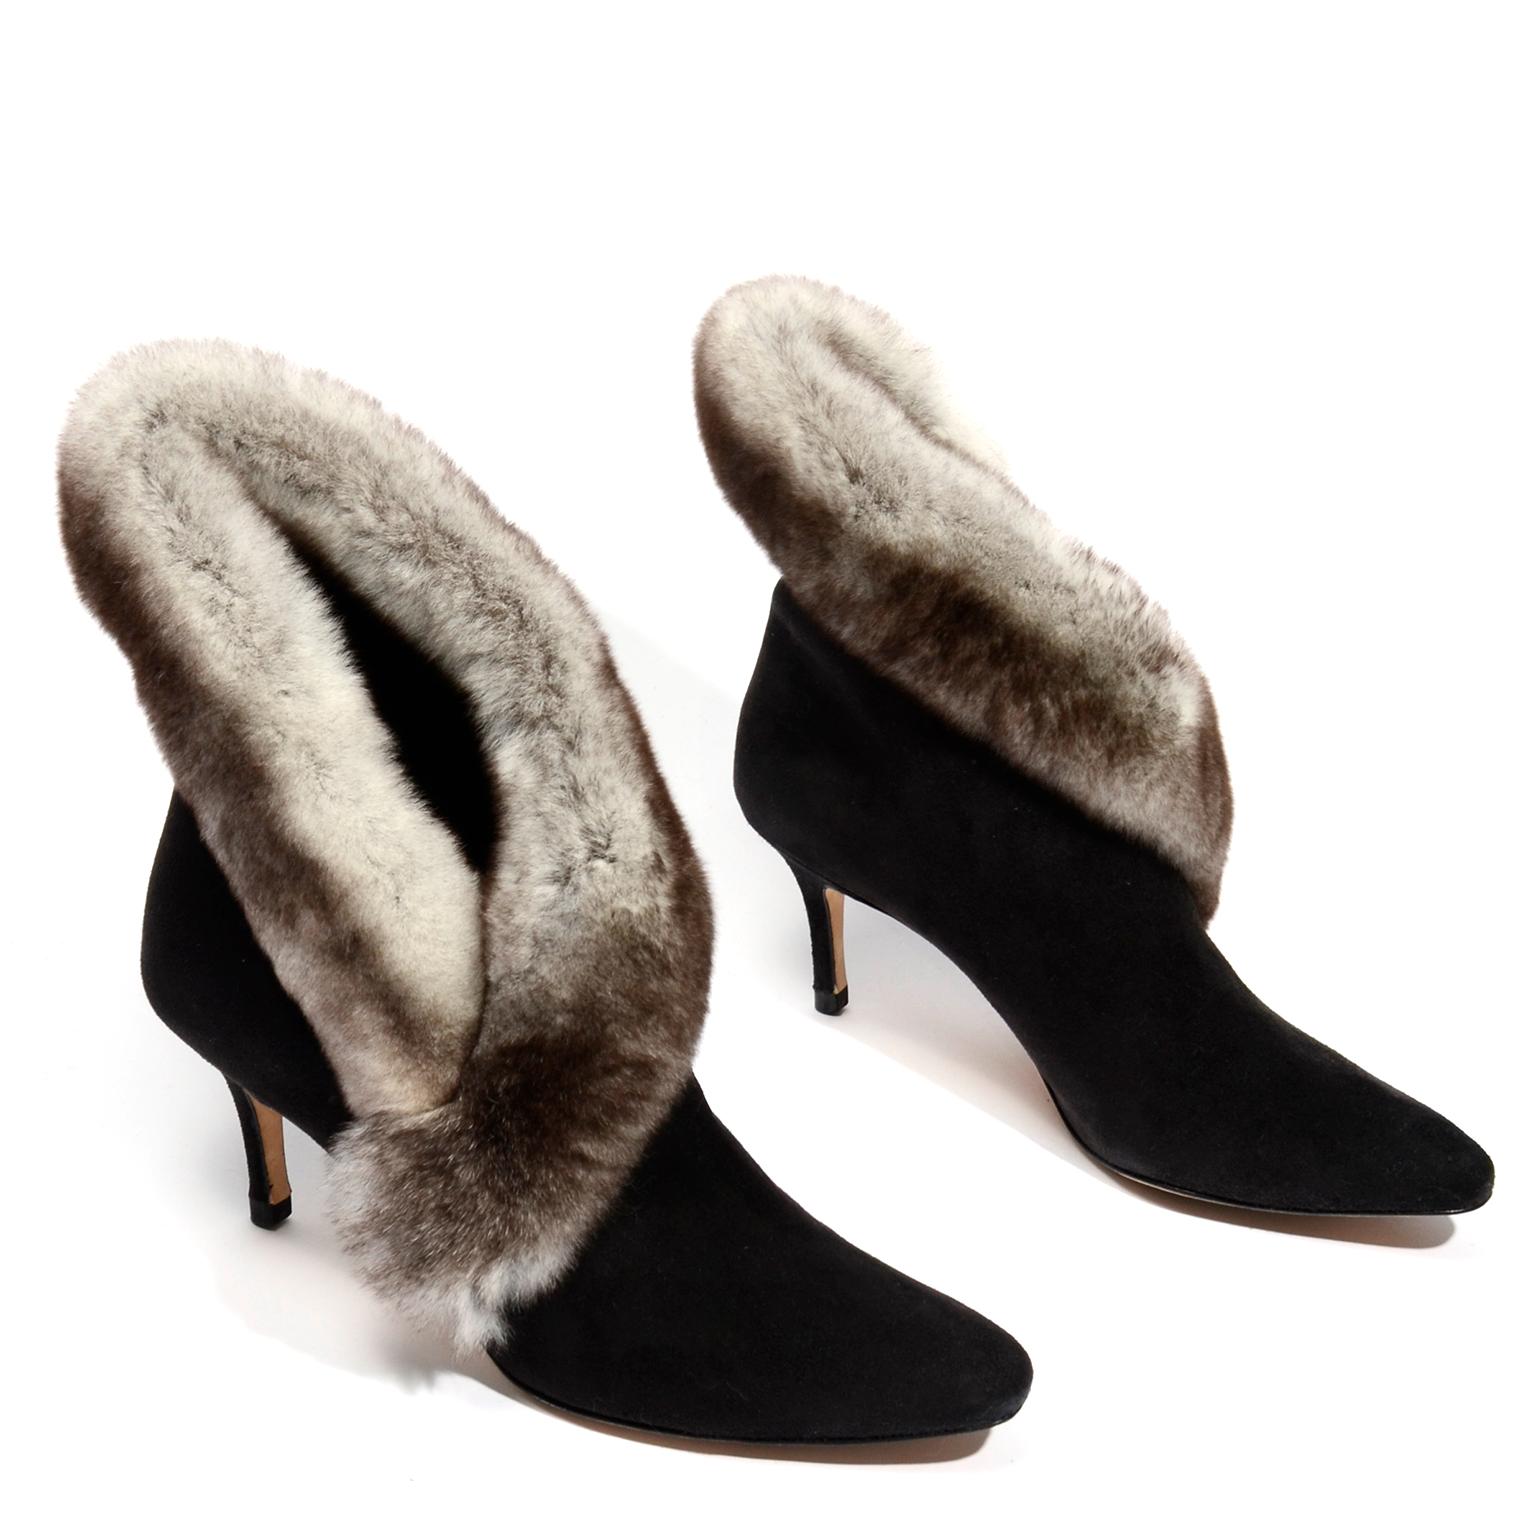  Manolo Blahnik Black Suede Booties W Heels & Luxe Mink Trim w Box & Shoe Bags In Excellent Condition In Portland, OR